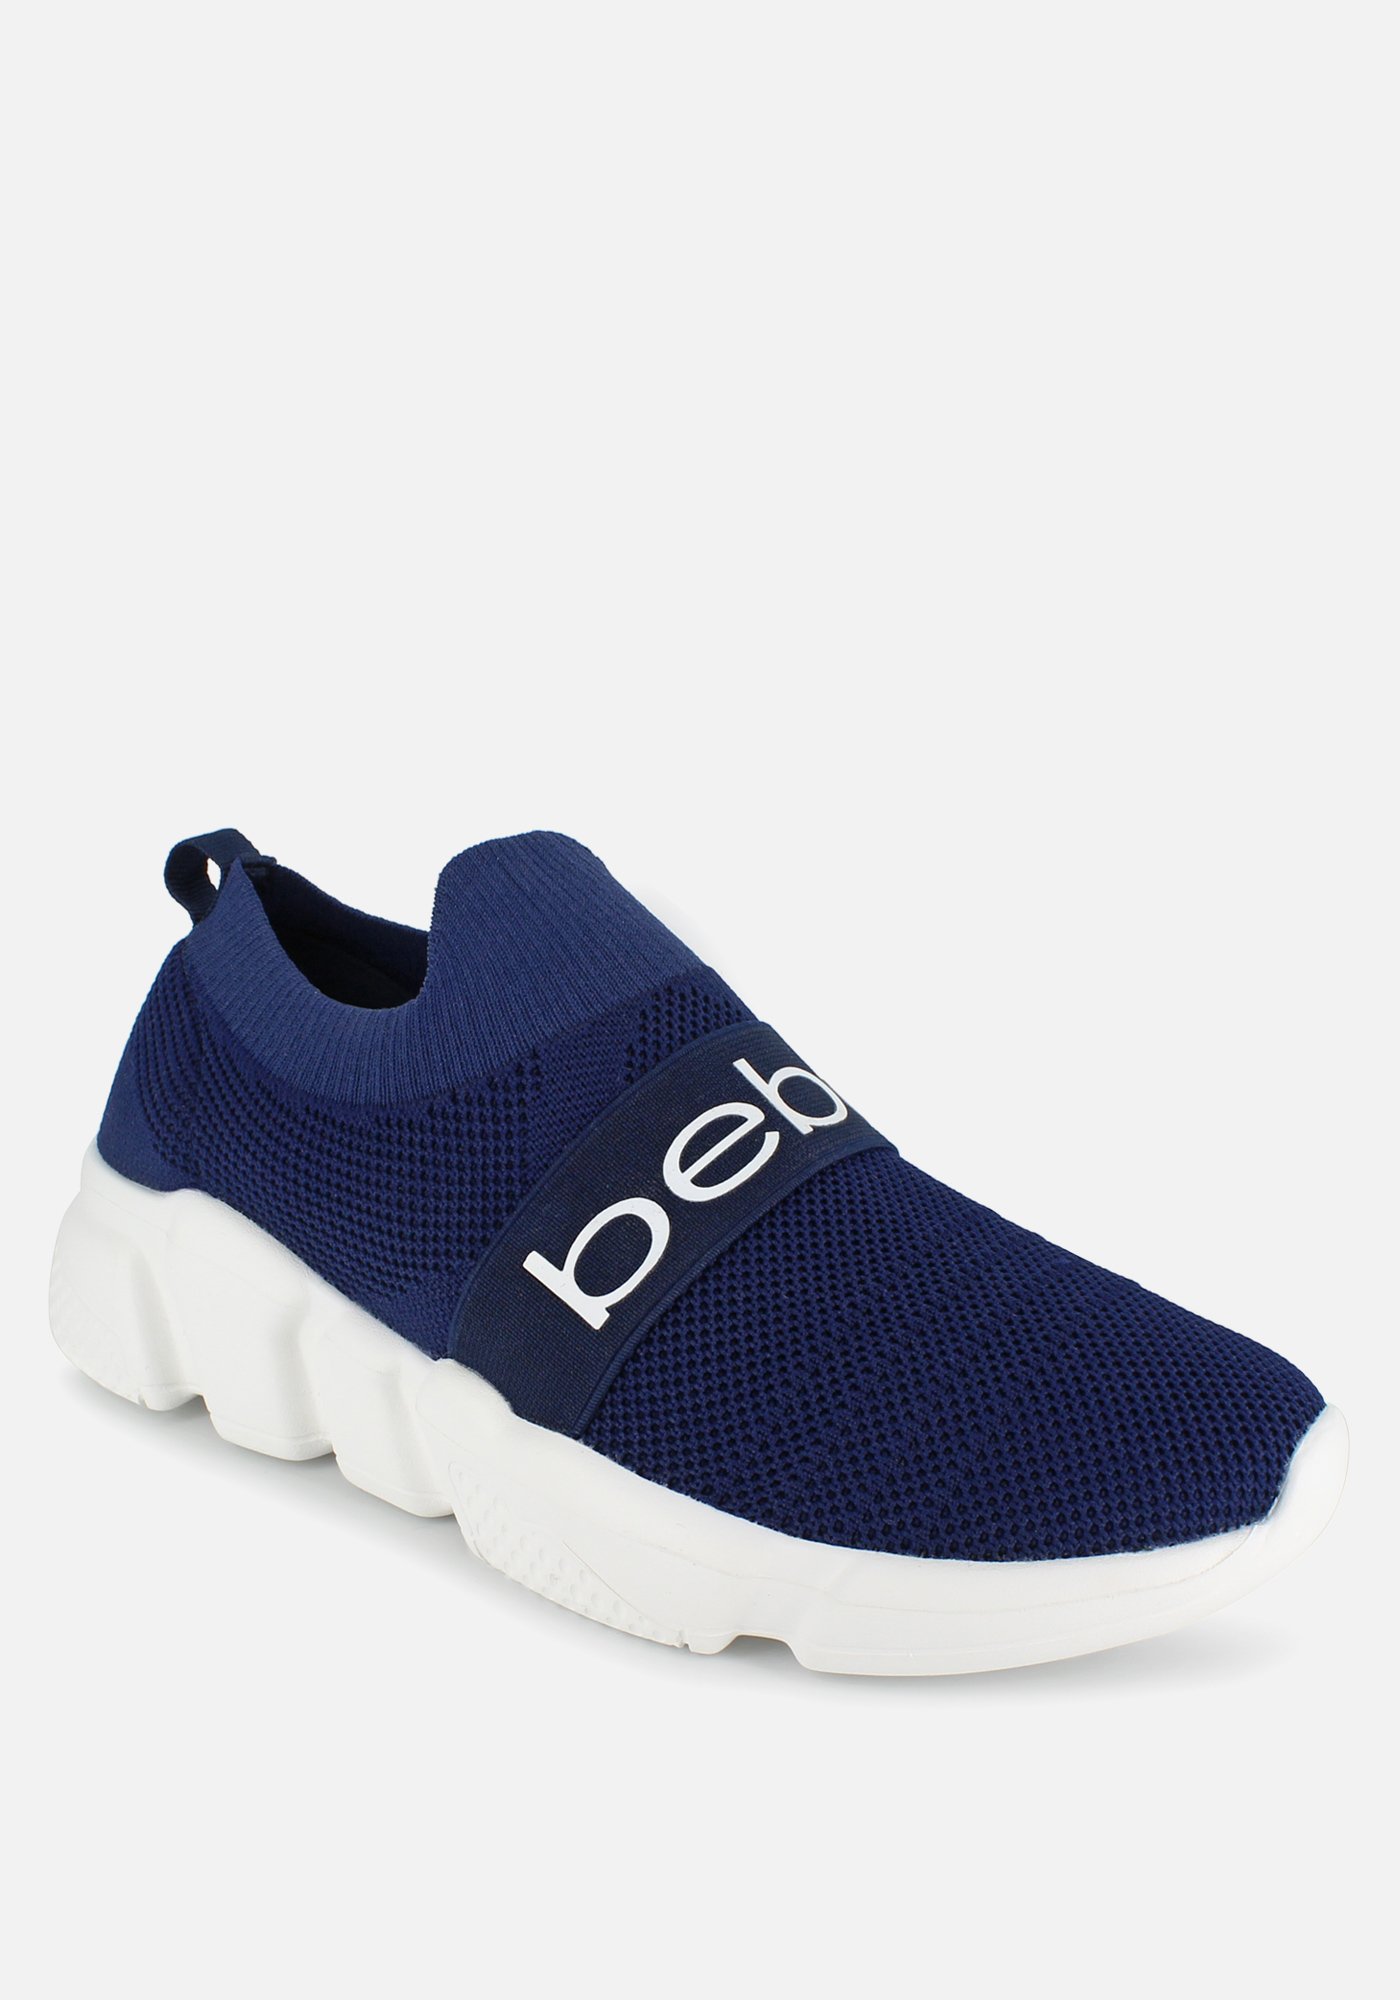 Bebe Women's Aindrea Platform Sneakers, Size 10 in Navy Blue Synthetic